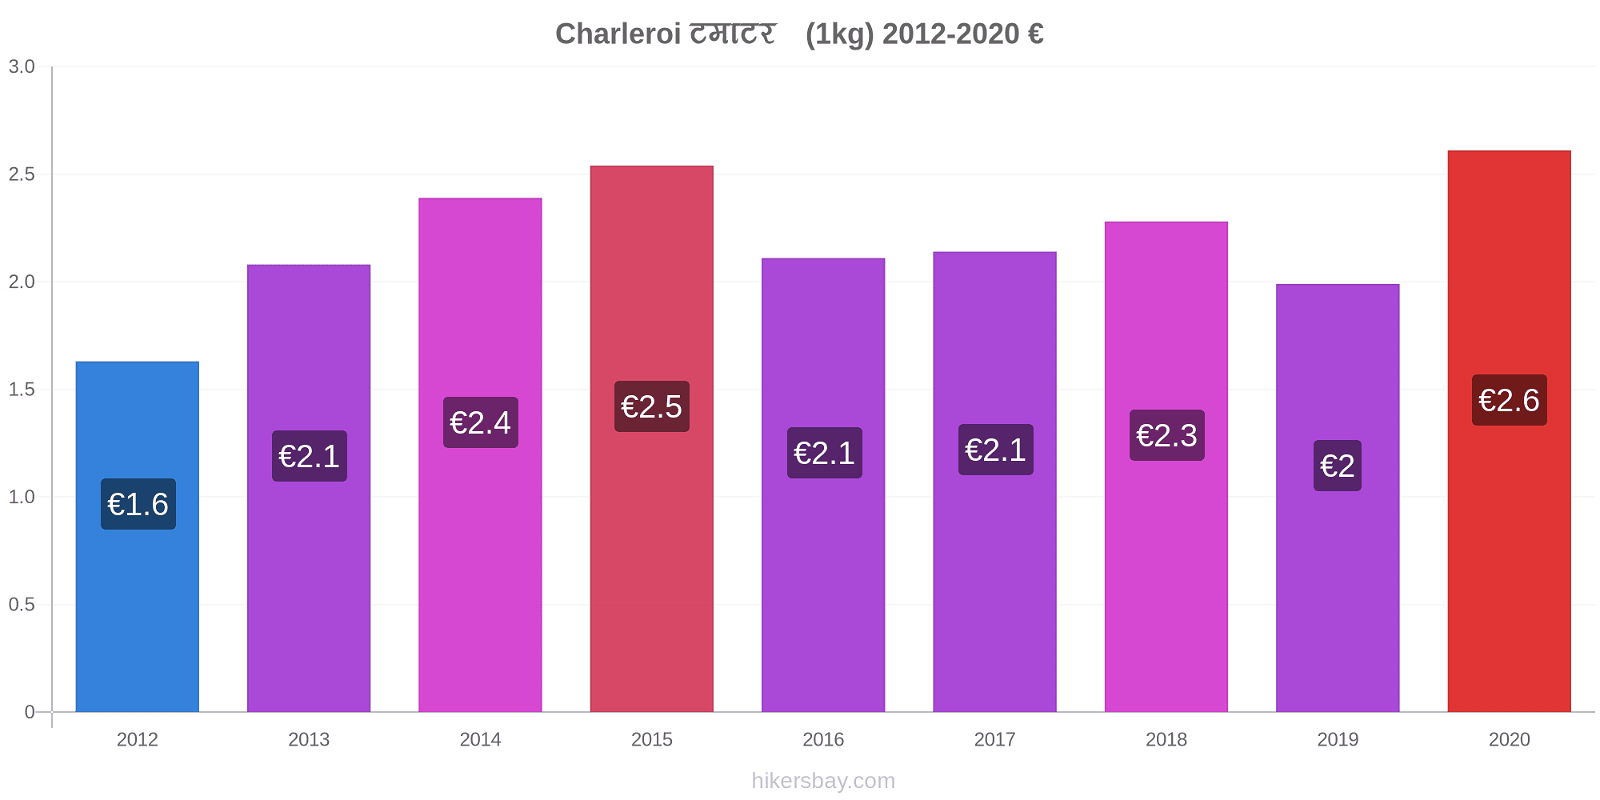 Charleroi मूल्य परिवर्तन टमाटर (1kg) hikersbay.com